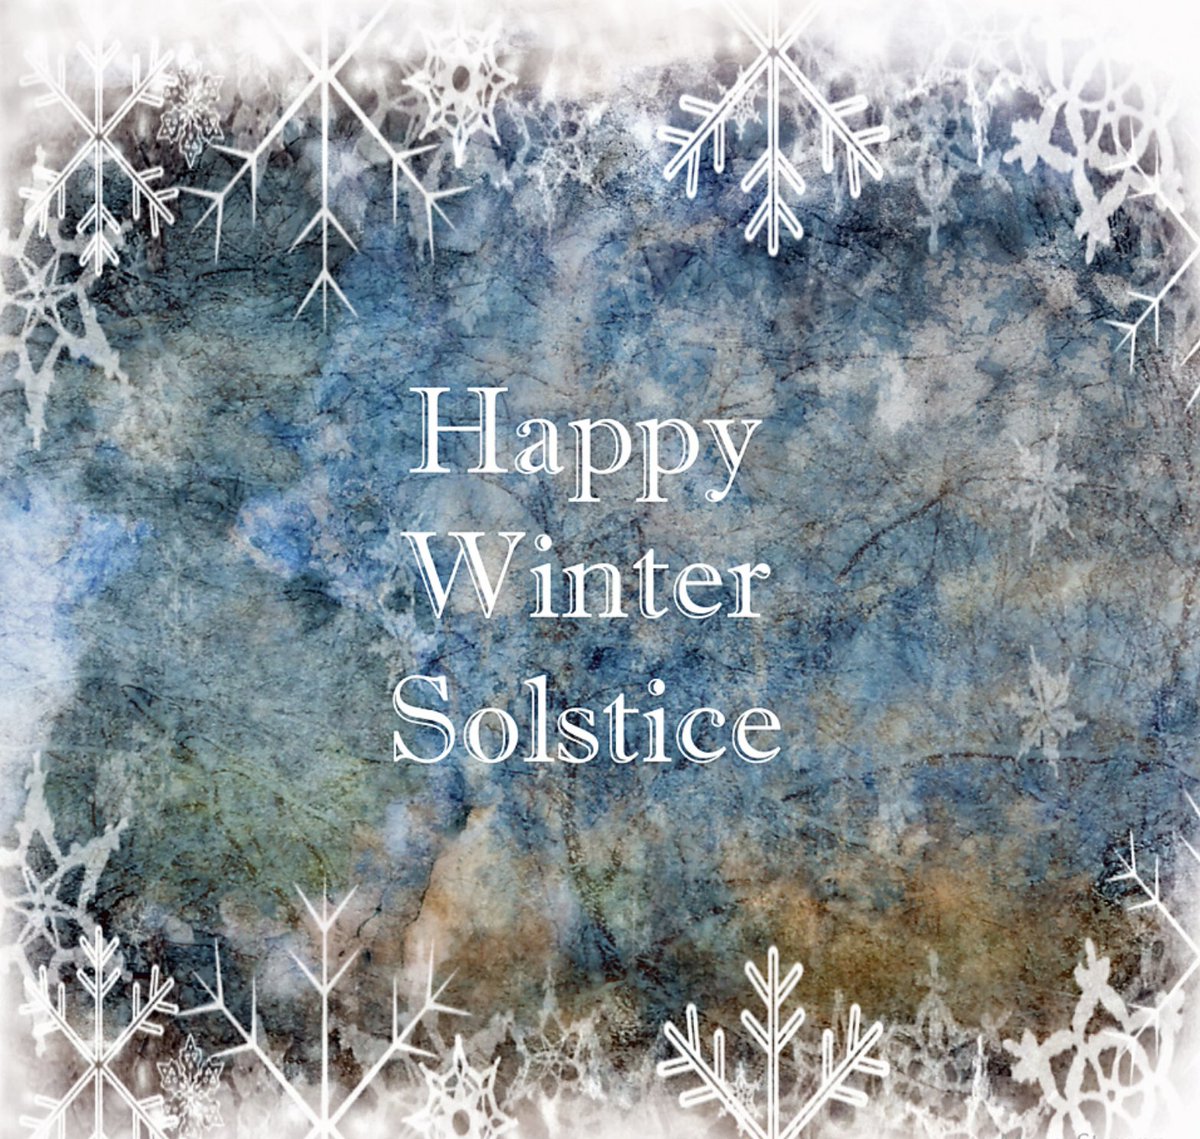 #HappySummerSolstice  2 the #NorthernHemisphere 
🌞☀️🌄🌇⛱️  
& #HappyWinterSolstice 2 the #SouthernHemisphere
❄️🌨️🏔️🌙🌉
#daylight #astronomy #AstronomicalSummer #astronomicalwinter